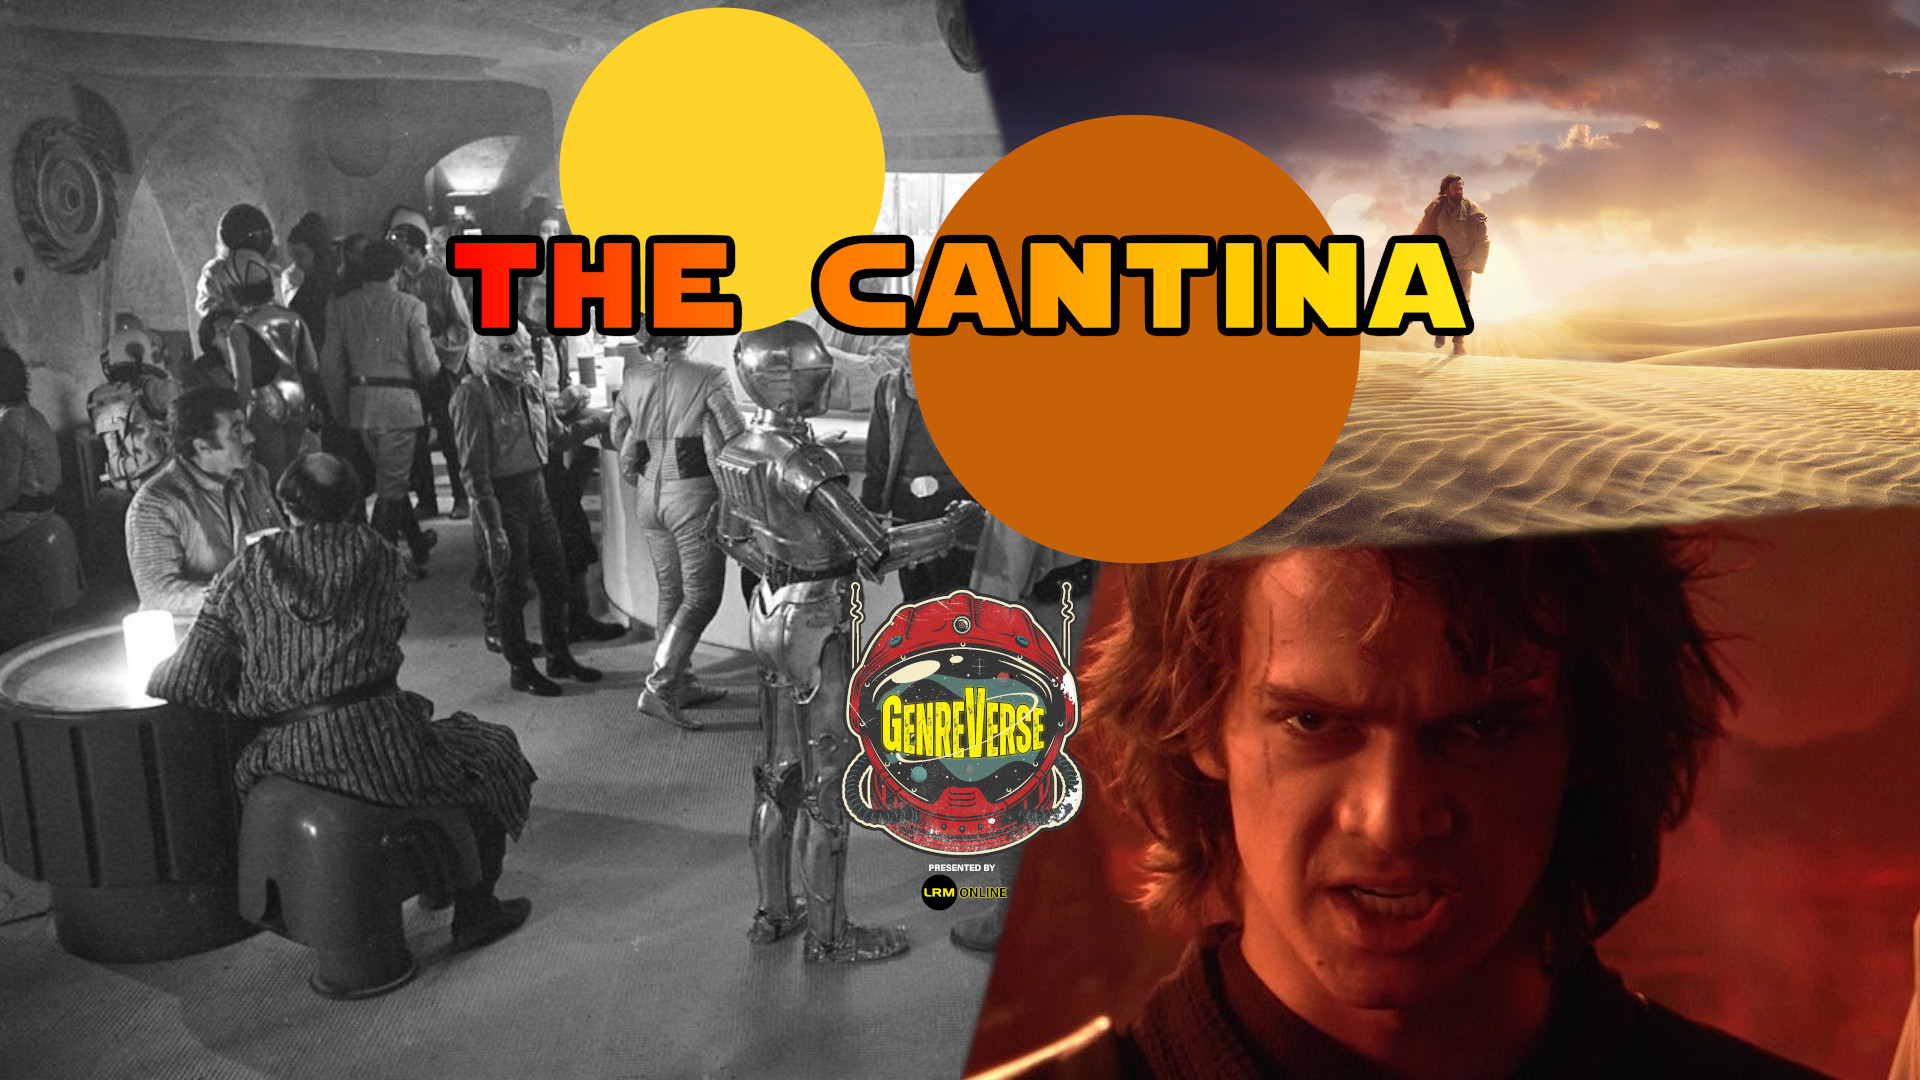 Obi-Wan Kenobi News & Rumors: Vader’s Episode Count, John Williams’s Music, And More! | The Cantina